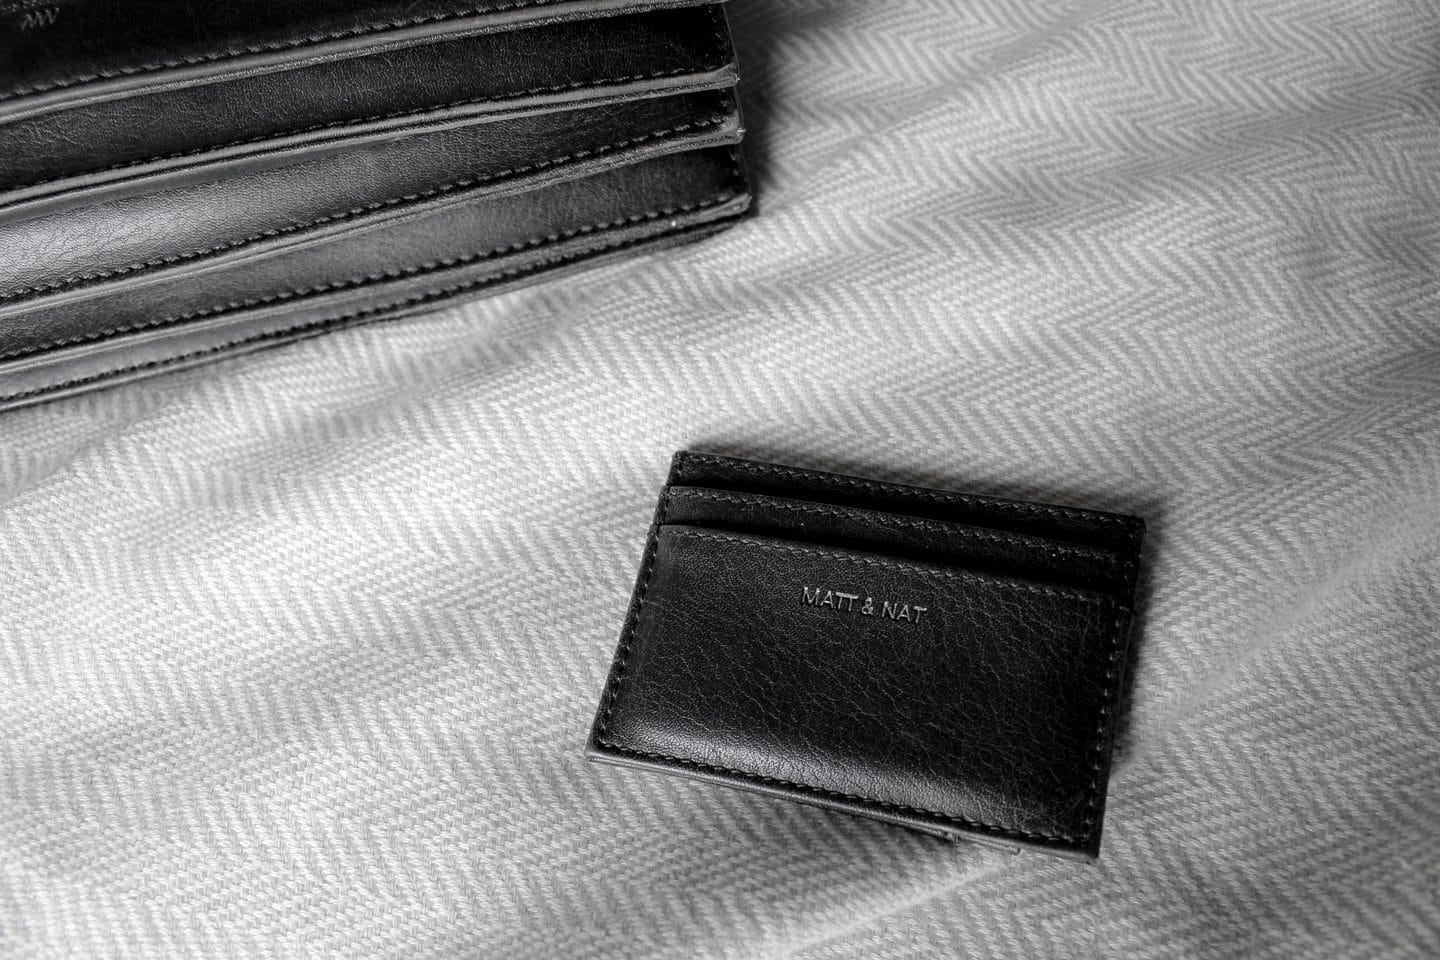 Matt & Nat vegan leather wallet and bag